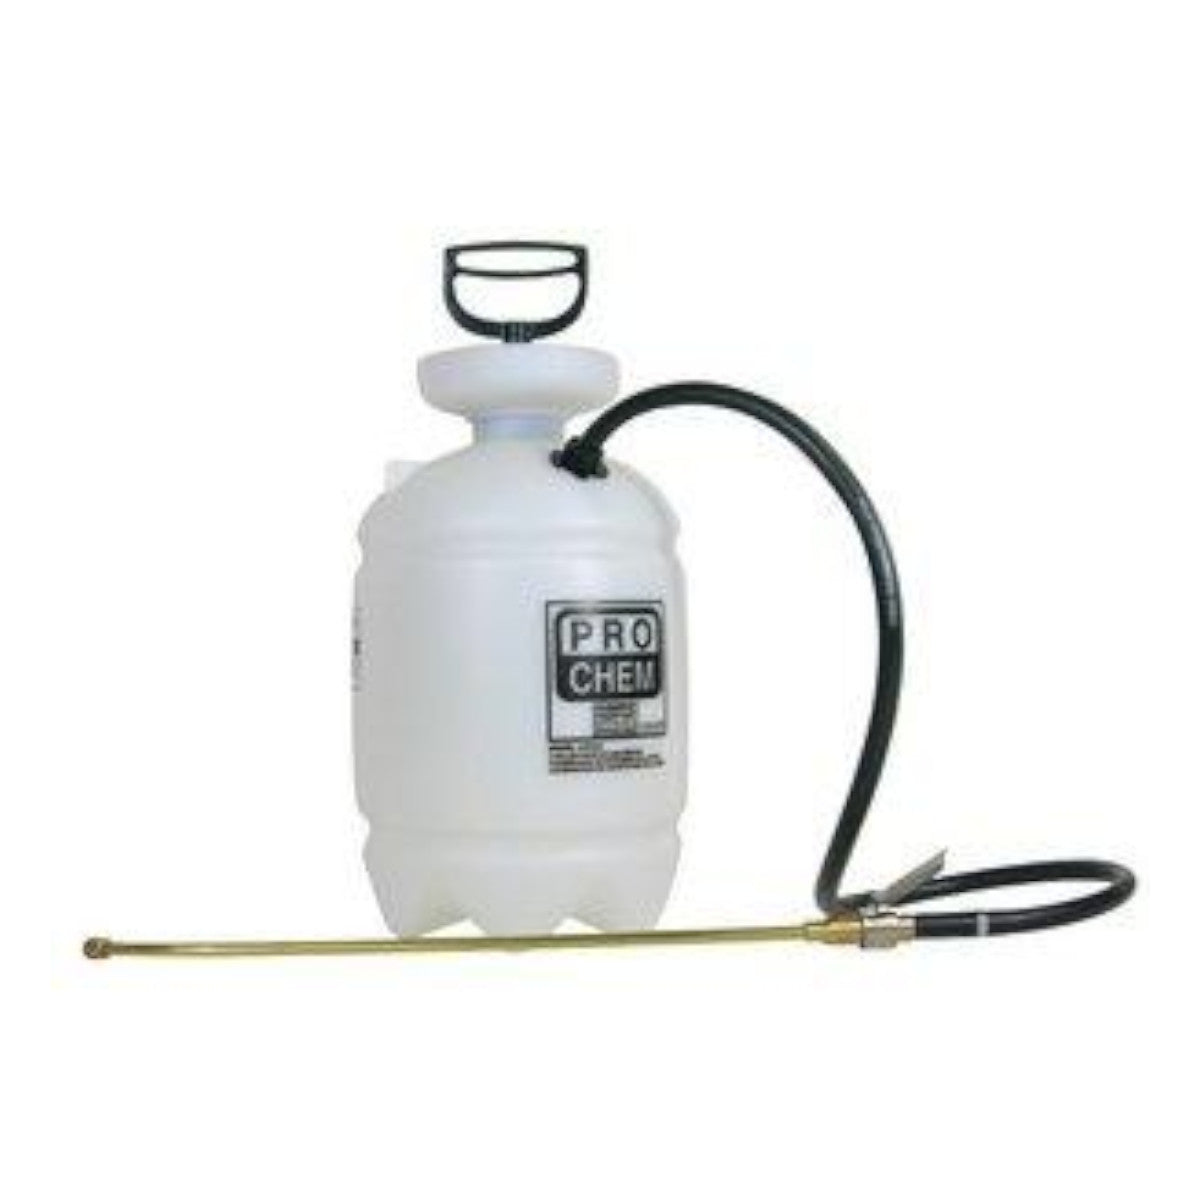 Pro Chem Industrial Sprayer